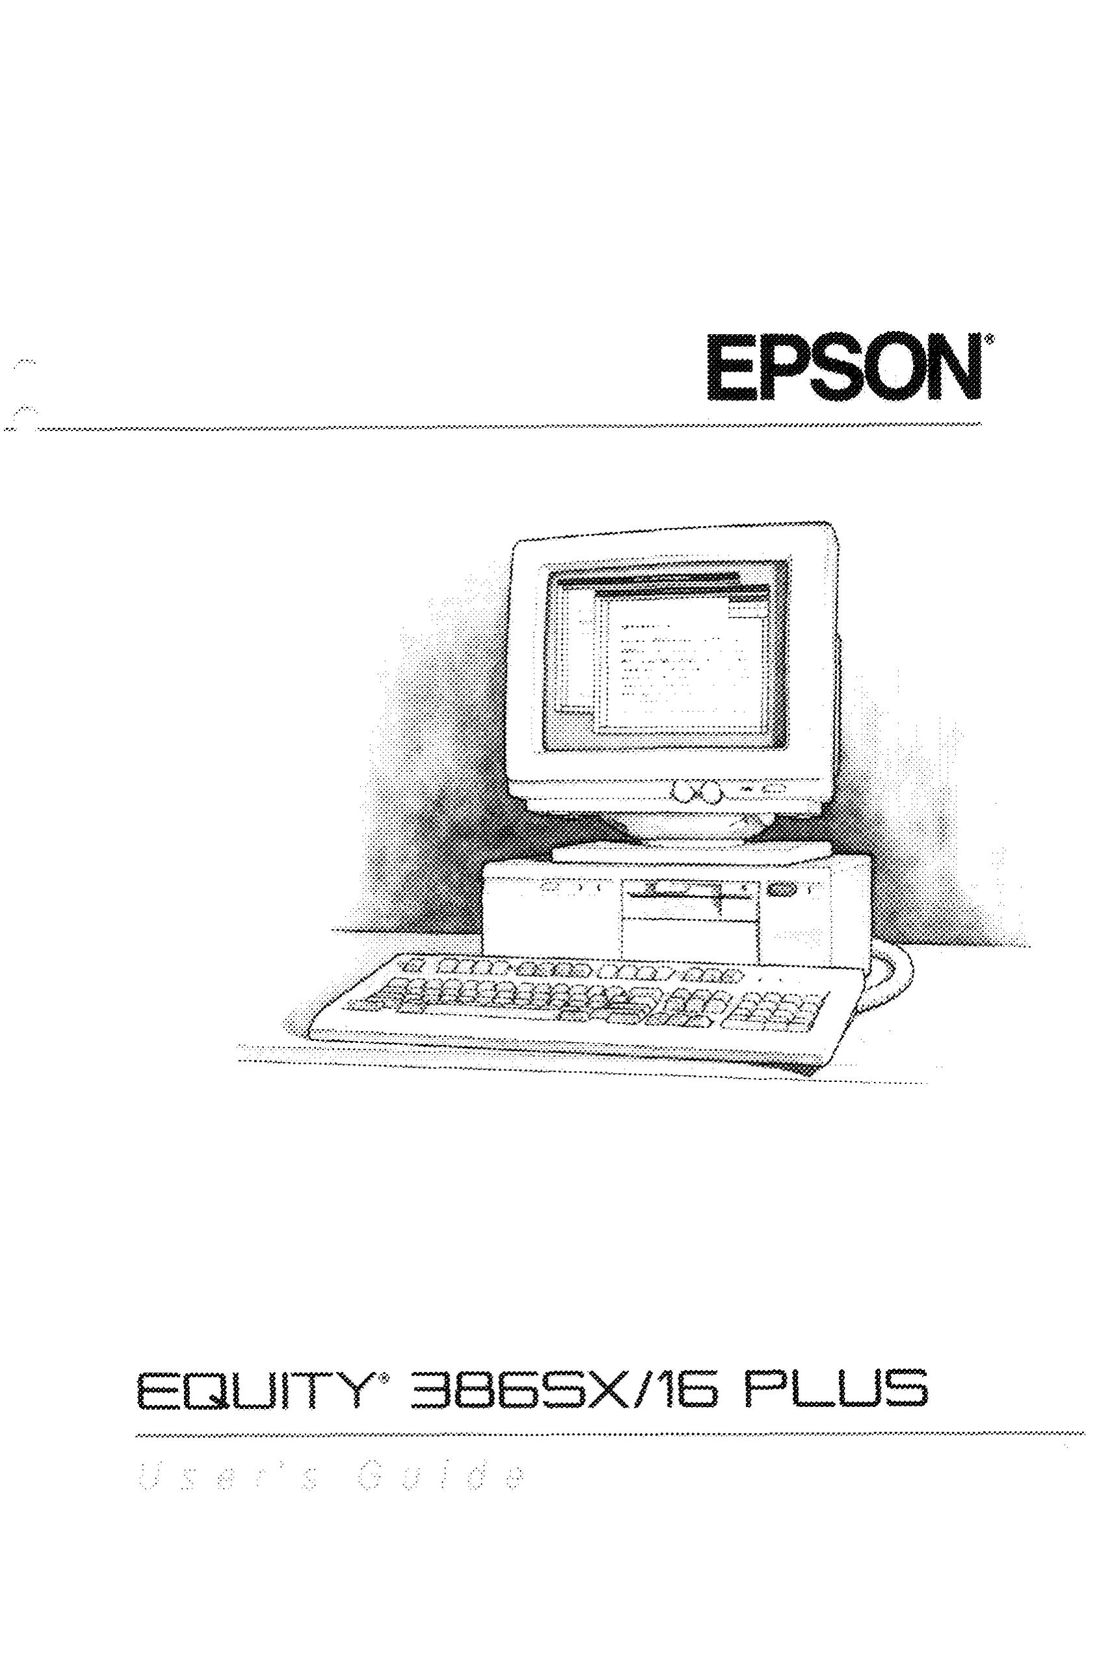 Epson 386SX/16 PLUS Personal Computer User Manual